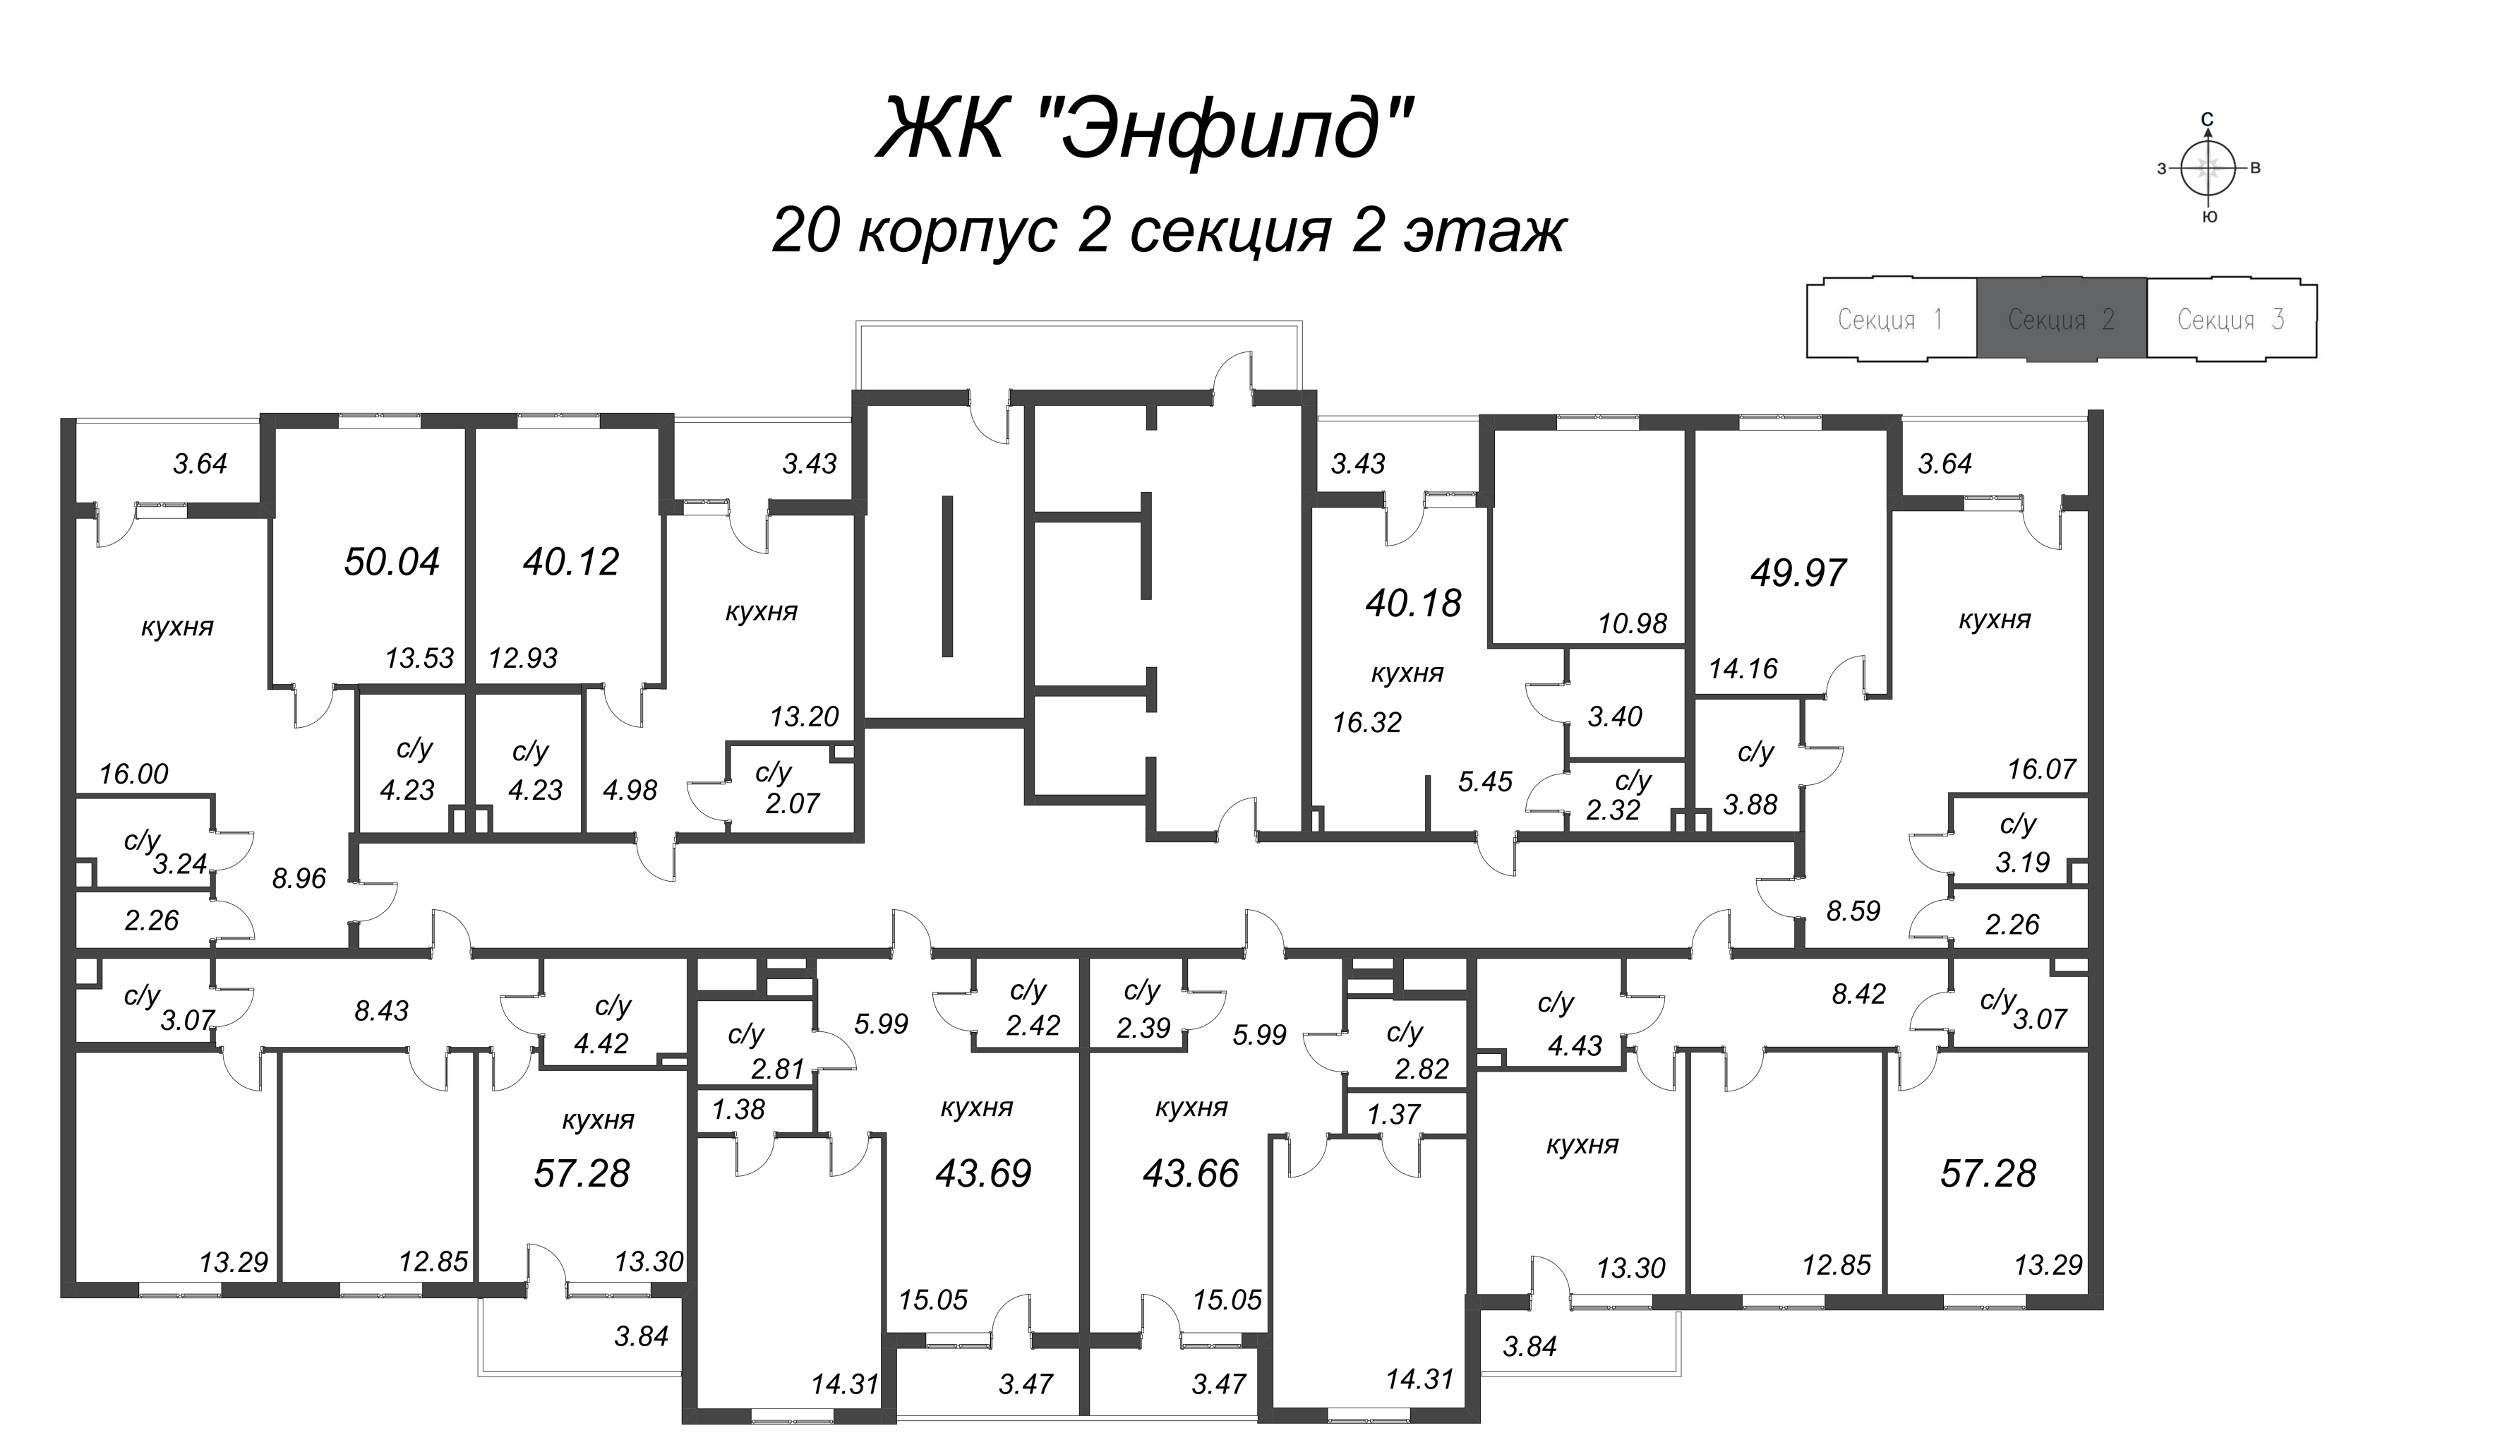 2-комнатная (Евро) квартира, 40.18 м² - планировка этажа